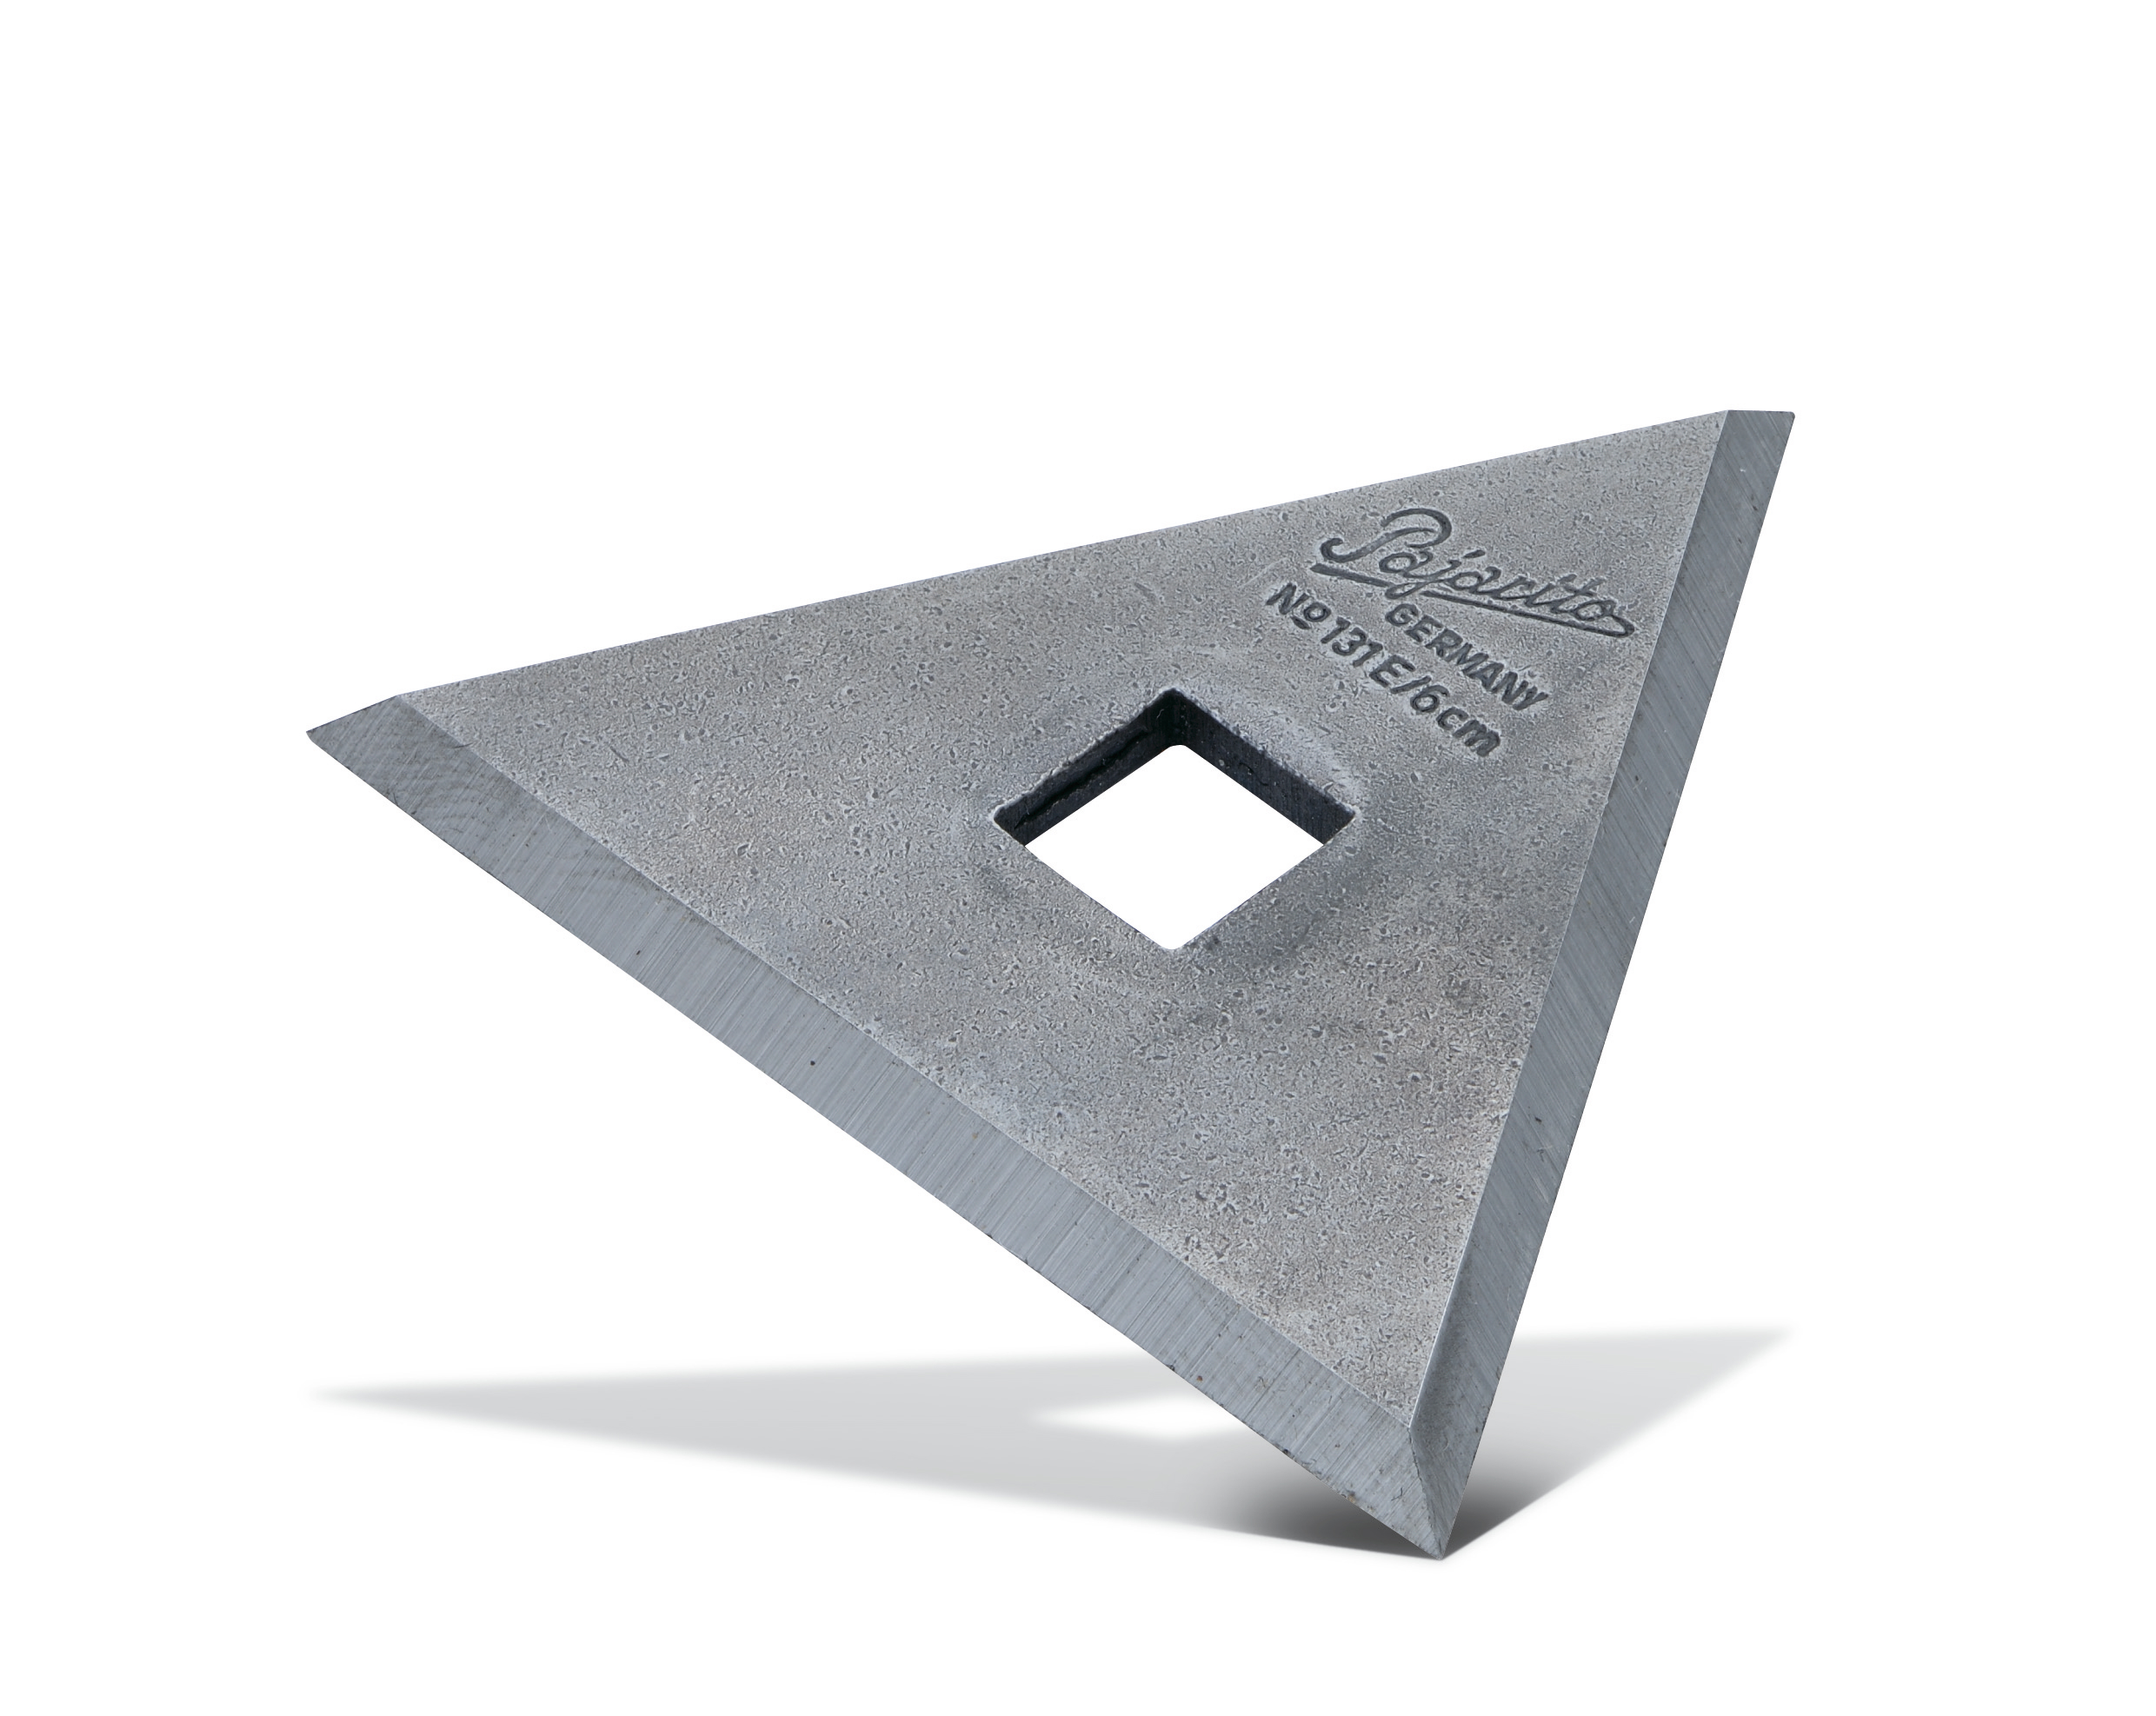 Triangular blade Pajarito